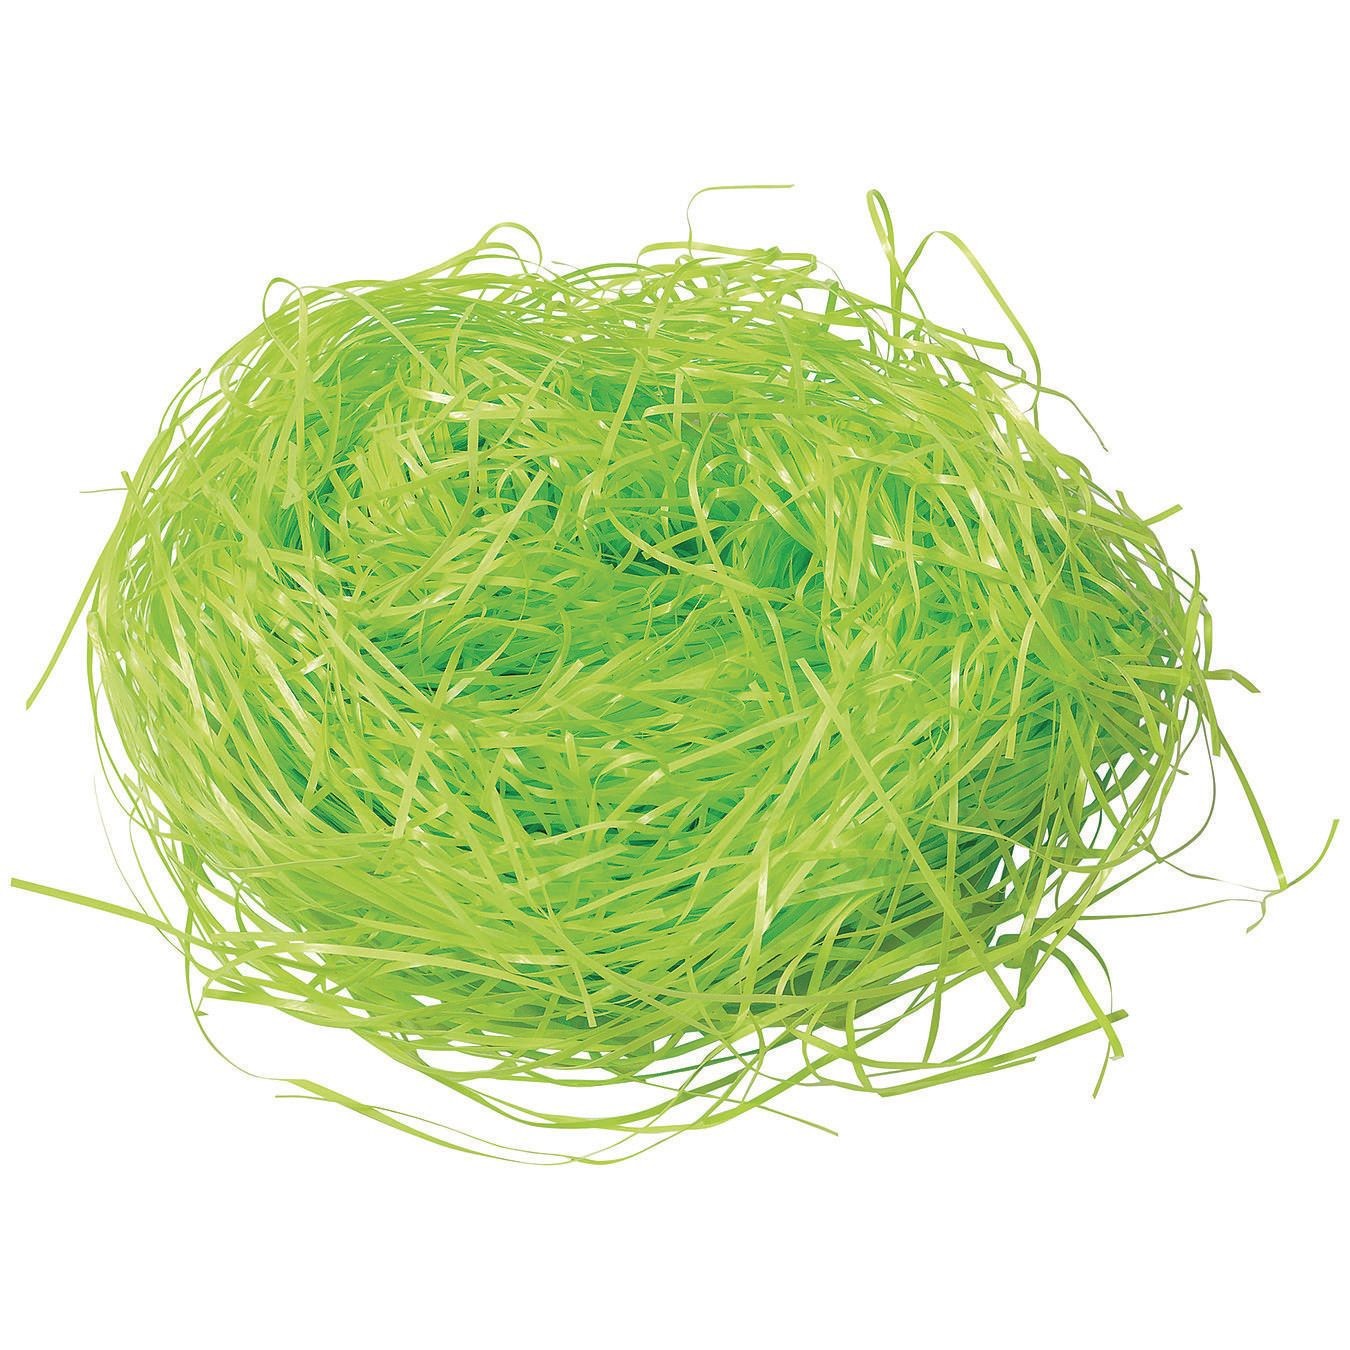 Buy Green Easter Grass, Easter Basket Filler at S&S Worldwide